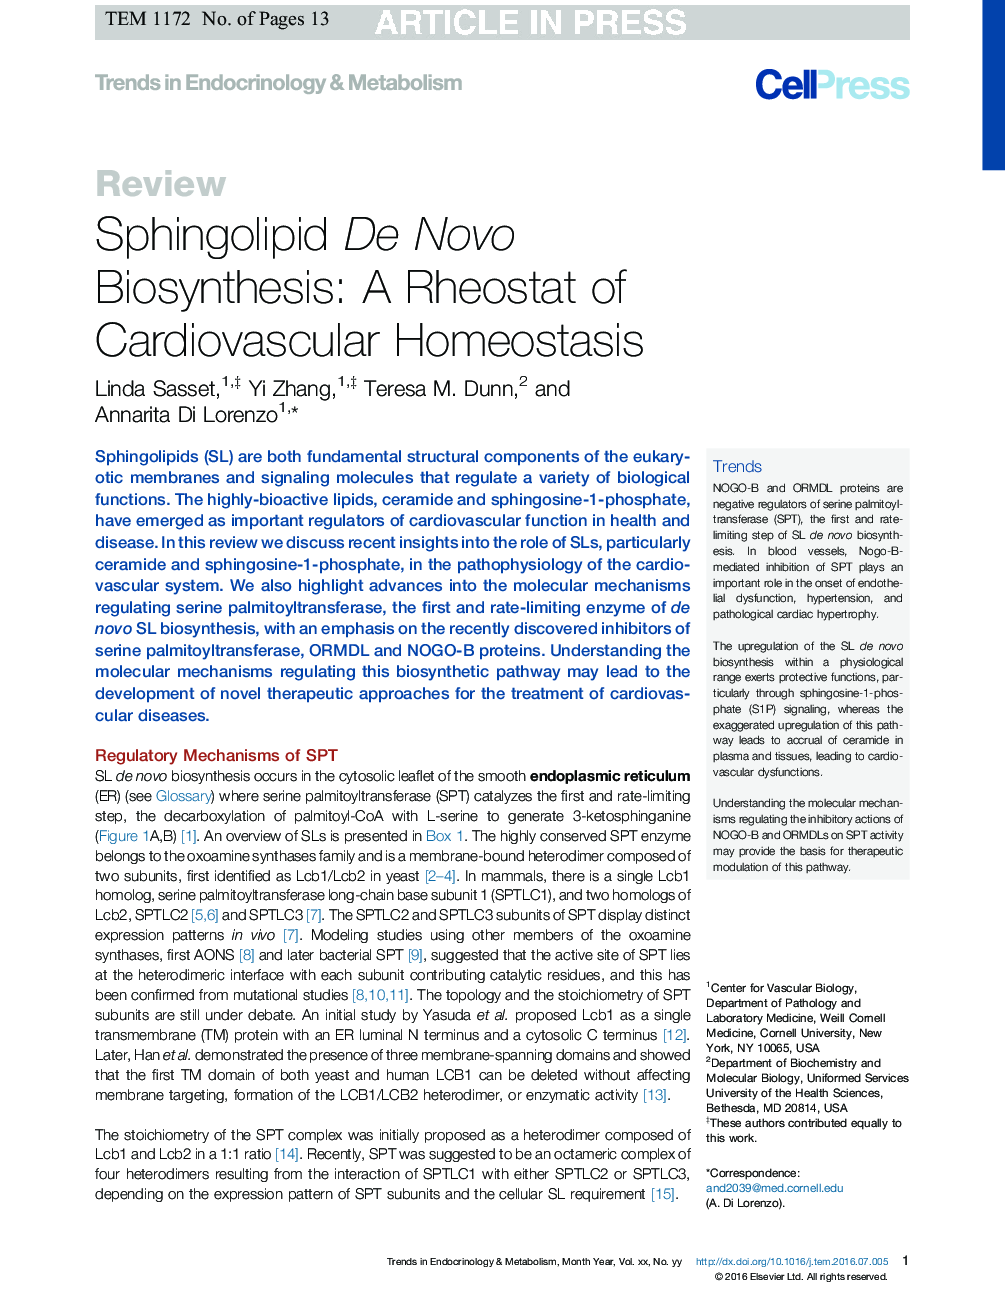 Sphingolipid De Novo Biosynthesis: A Rheostat of Cardiovascular Homeostasis